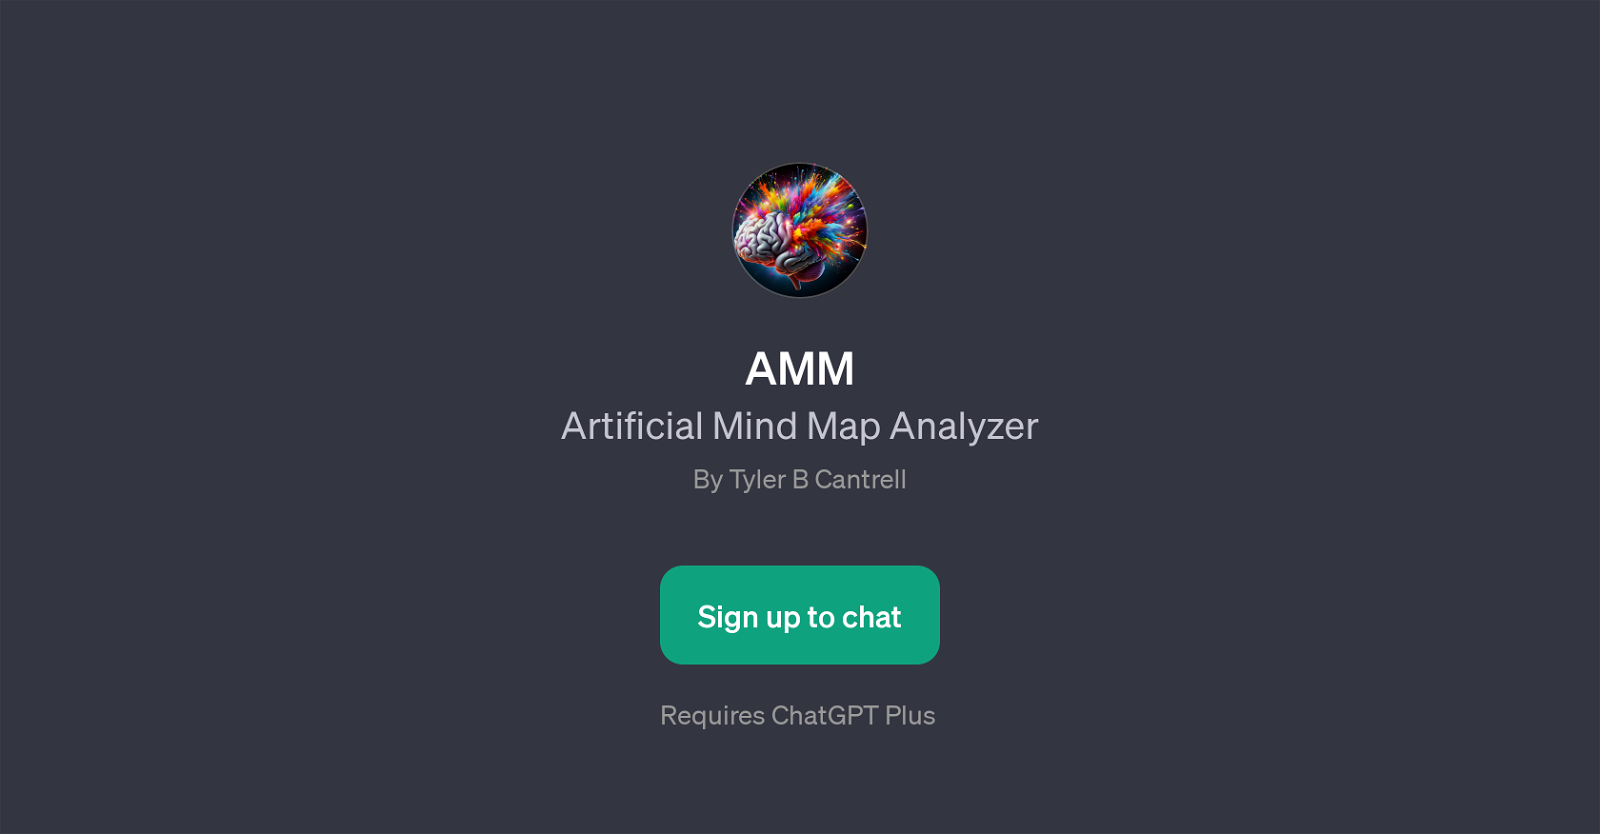 Artificial Mind Map Analyzer (AMM) website